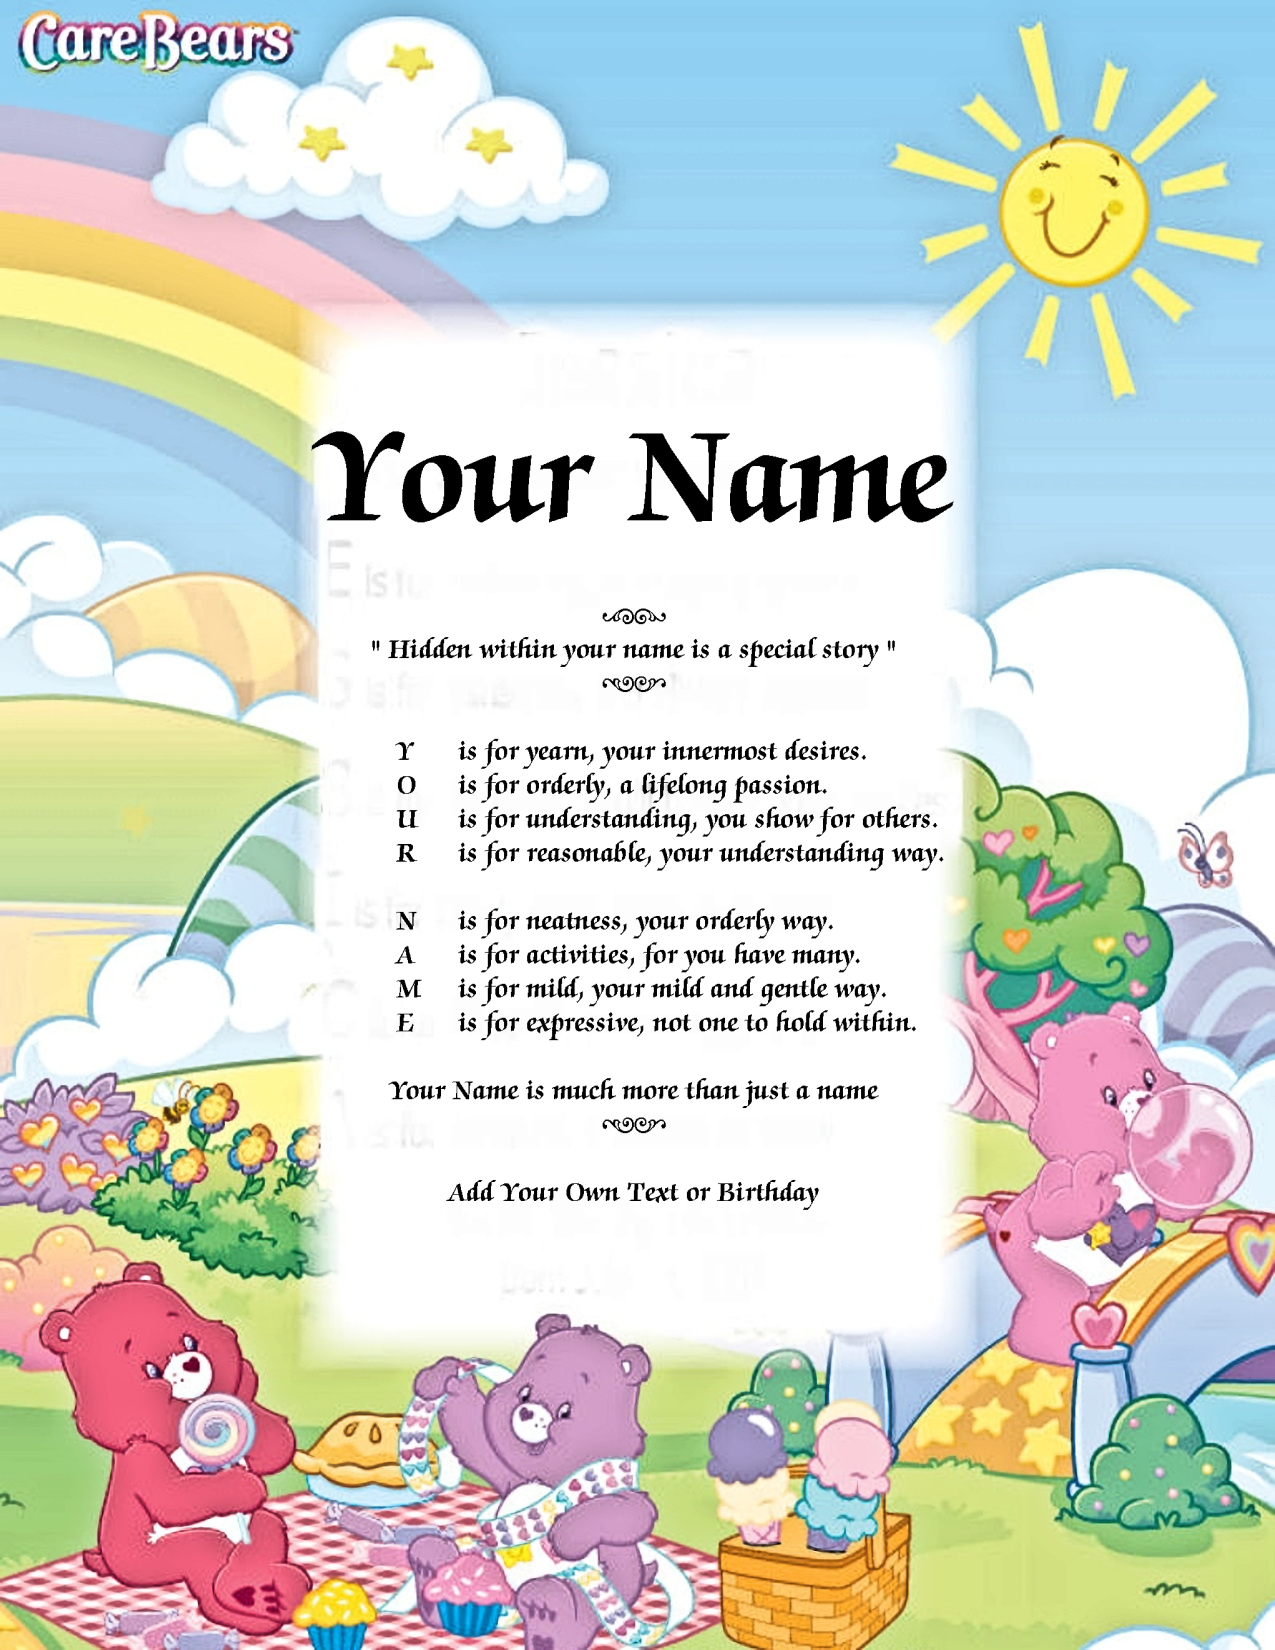 Care Bears Picnic Child Name Poem Story Digital Download Version